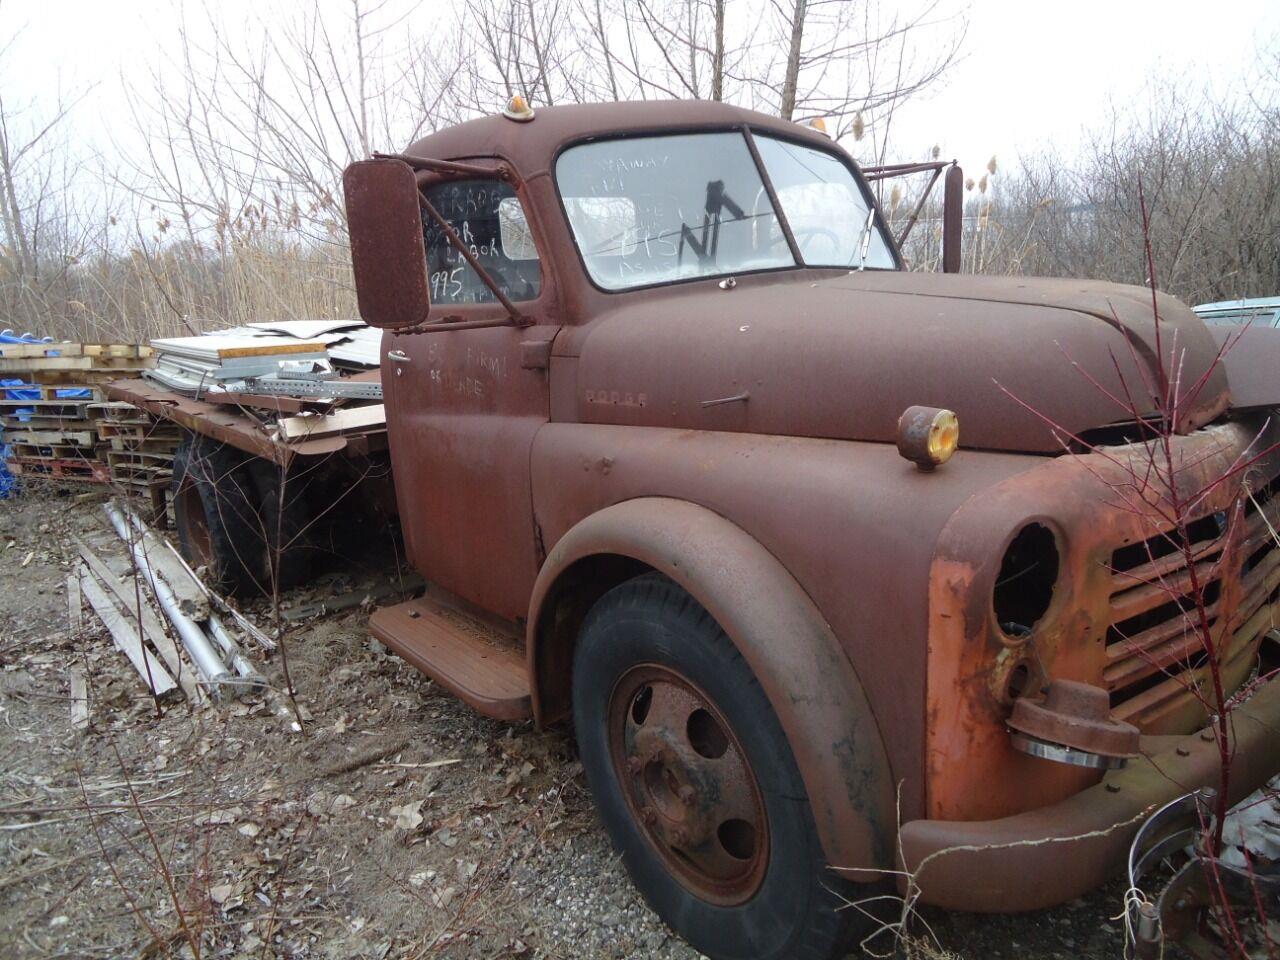 1952 Dodge Dump Truck for sale in Jackson, MI